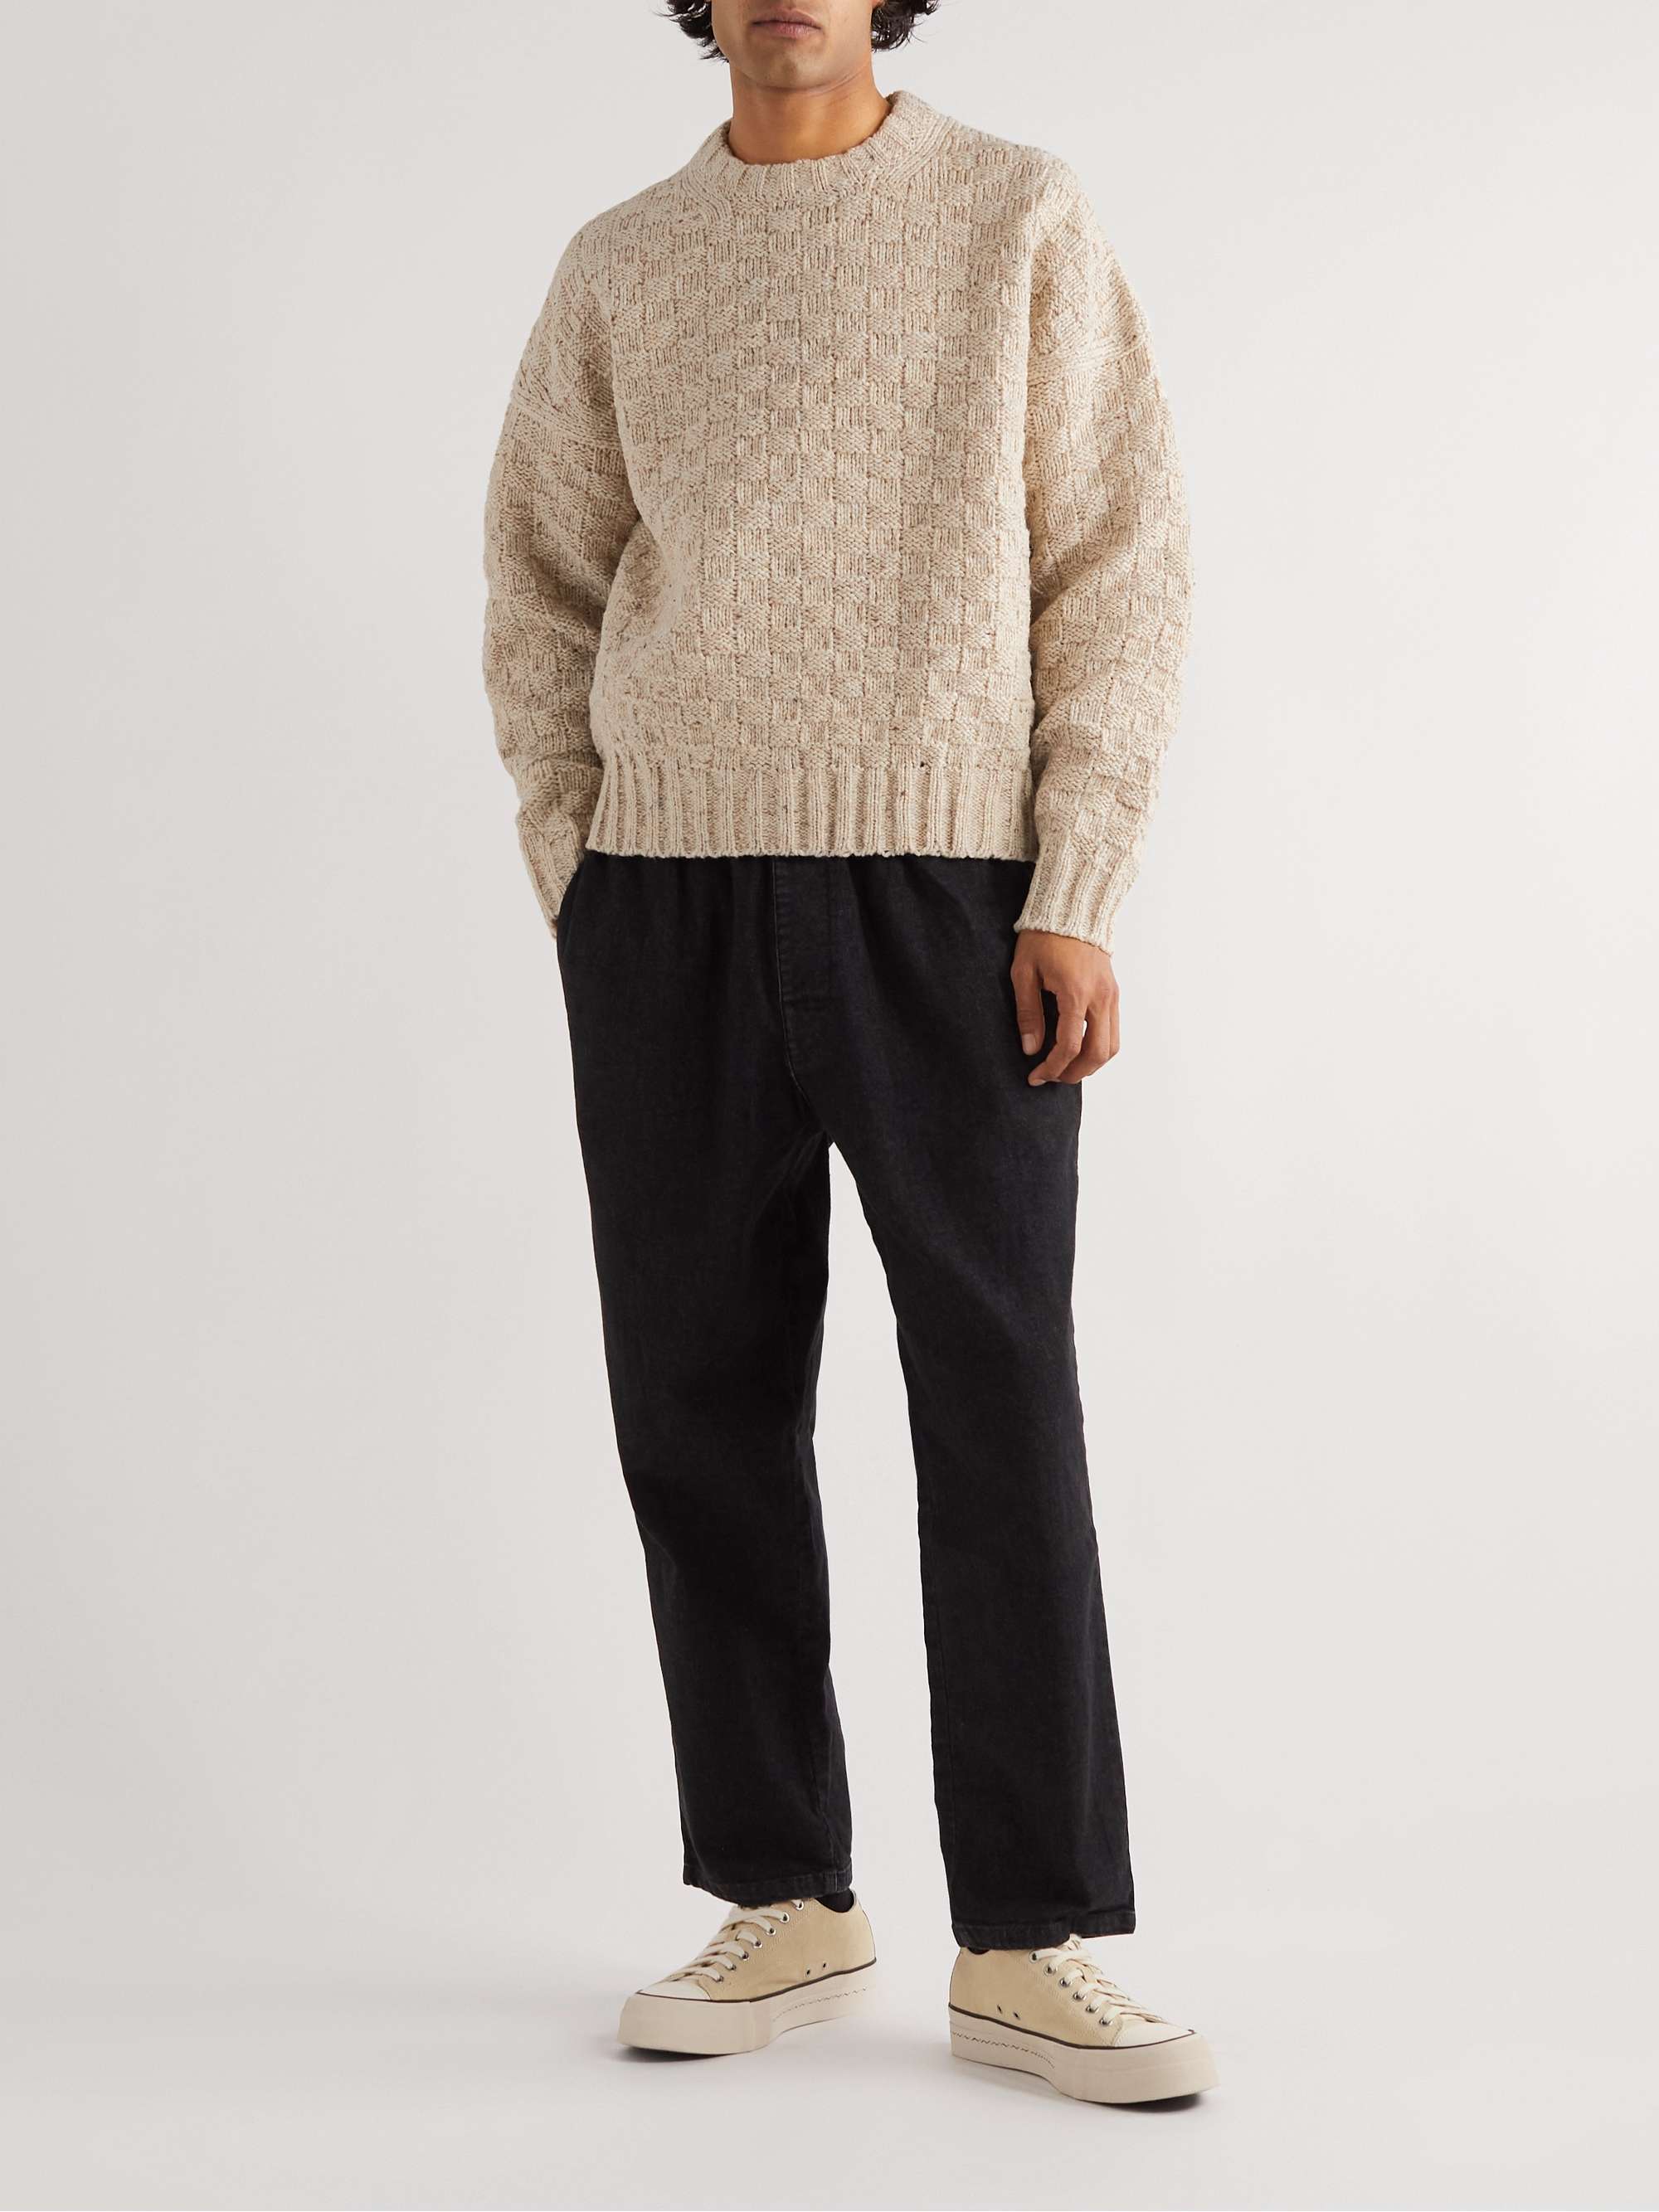 VISVIM Checkerboard Crocheted Wool Sweater for Men | MR PORTER